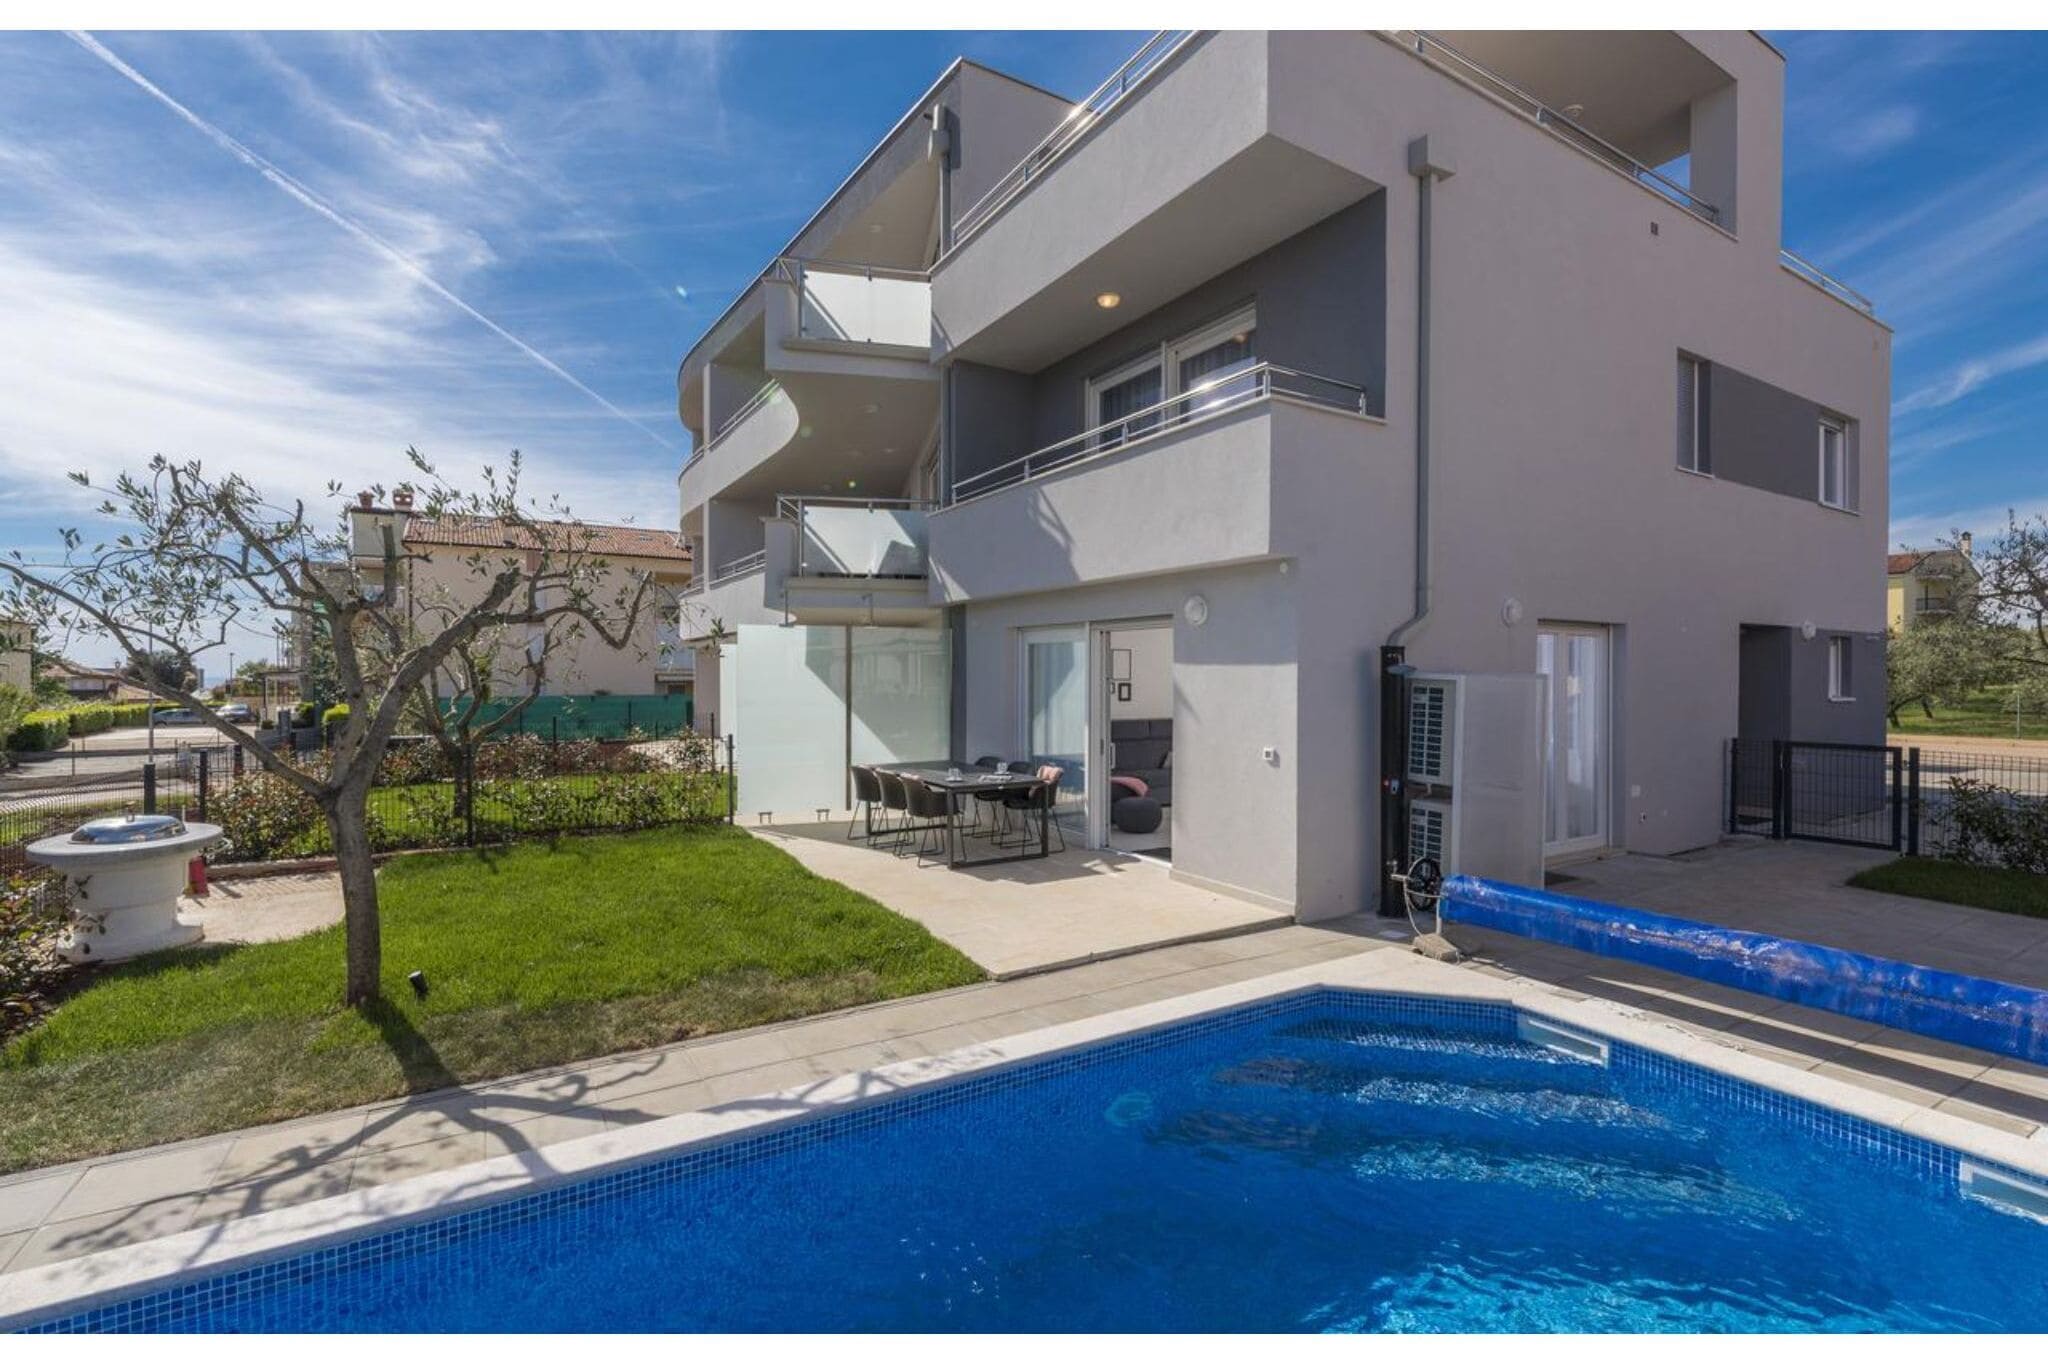 Appartement moderne avec piscine privée, jacuzzi, jardin et terrasse